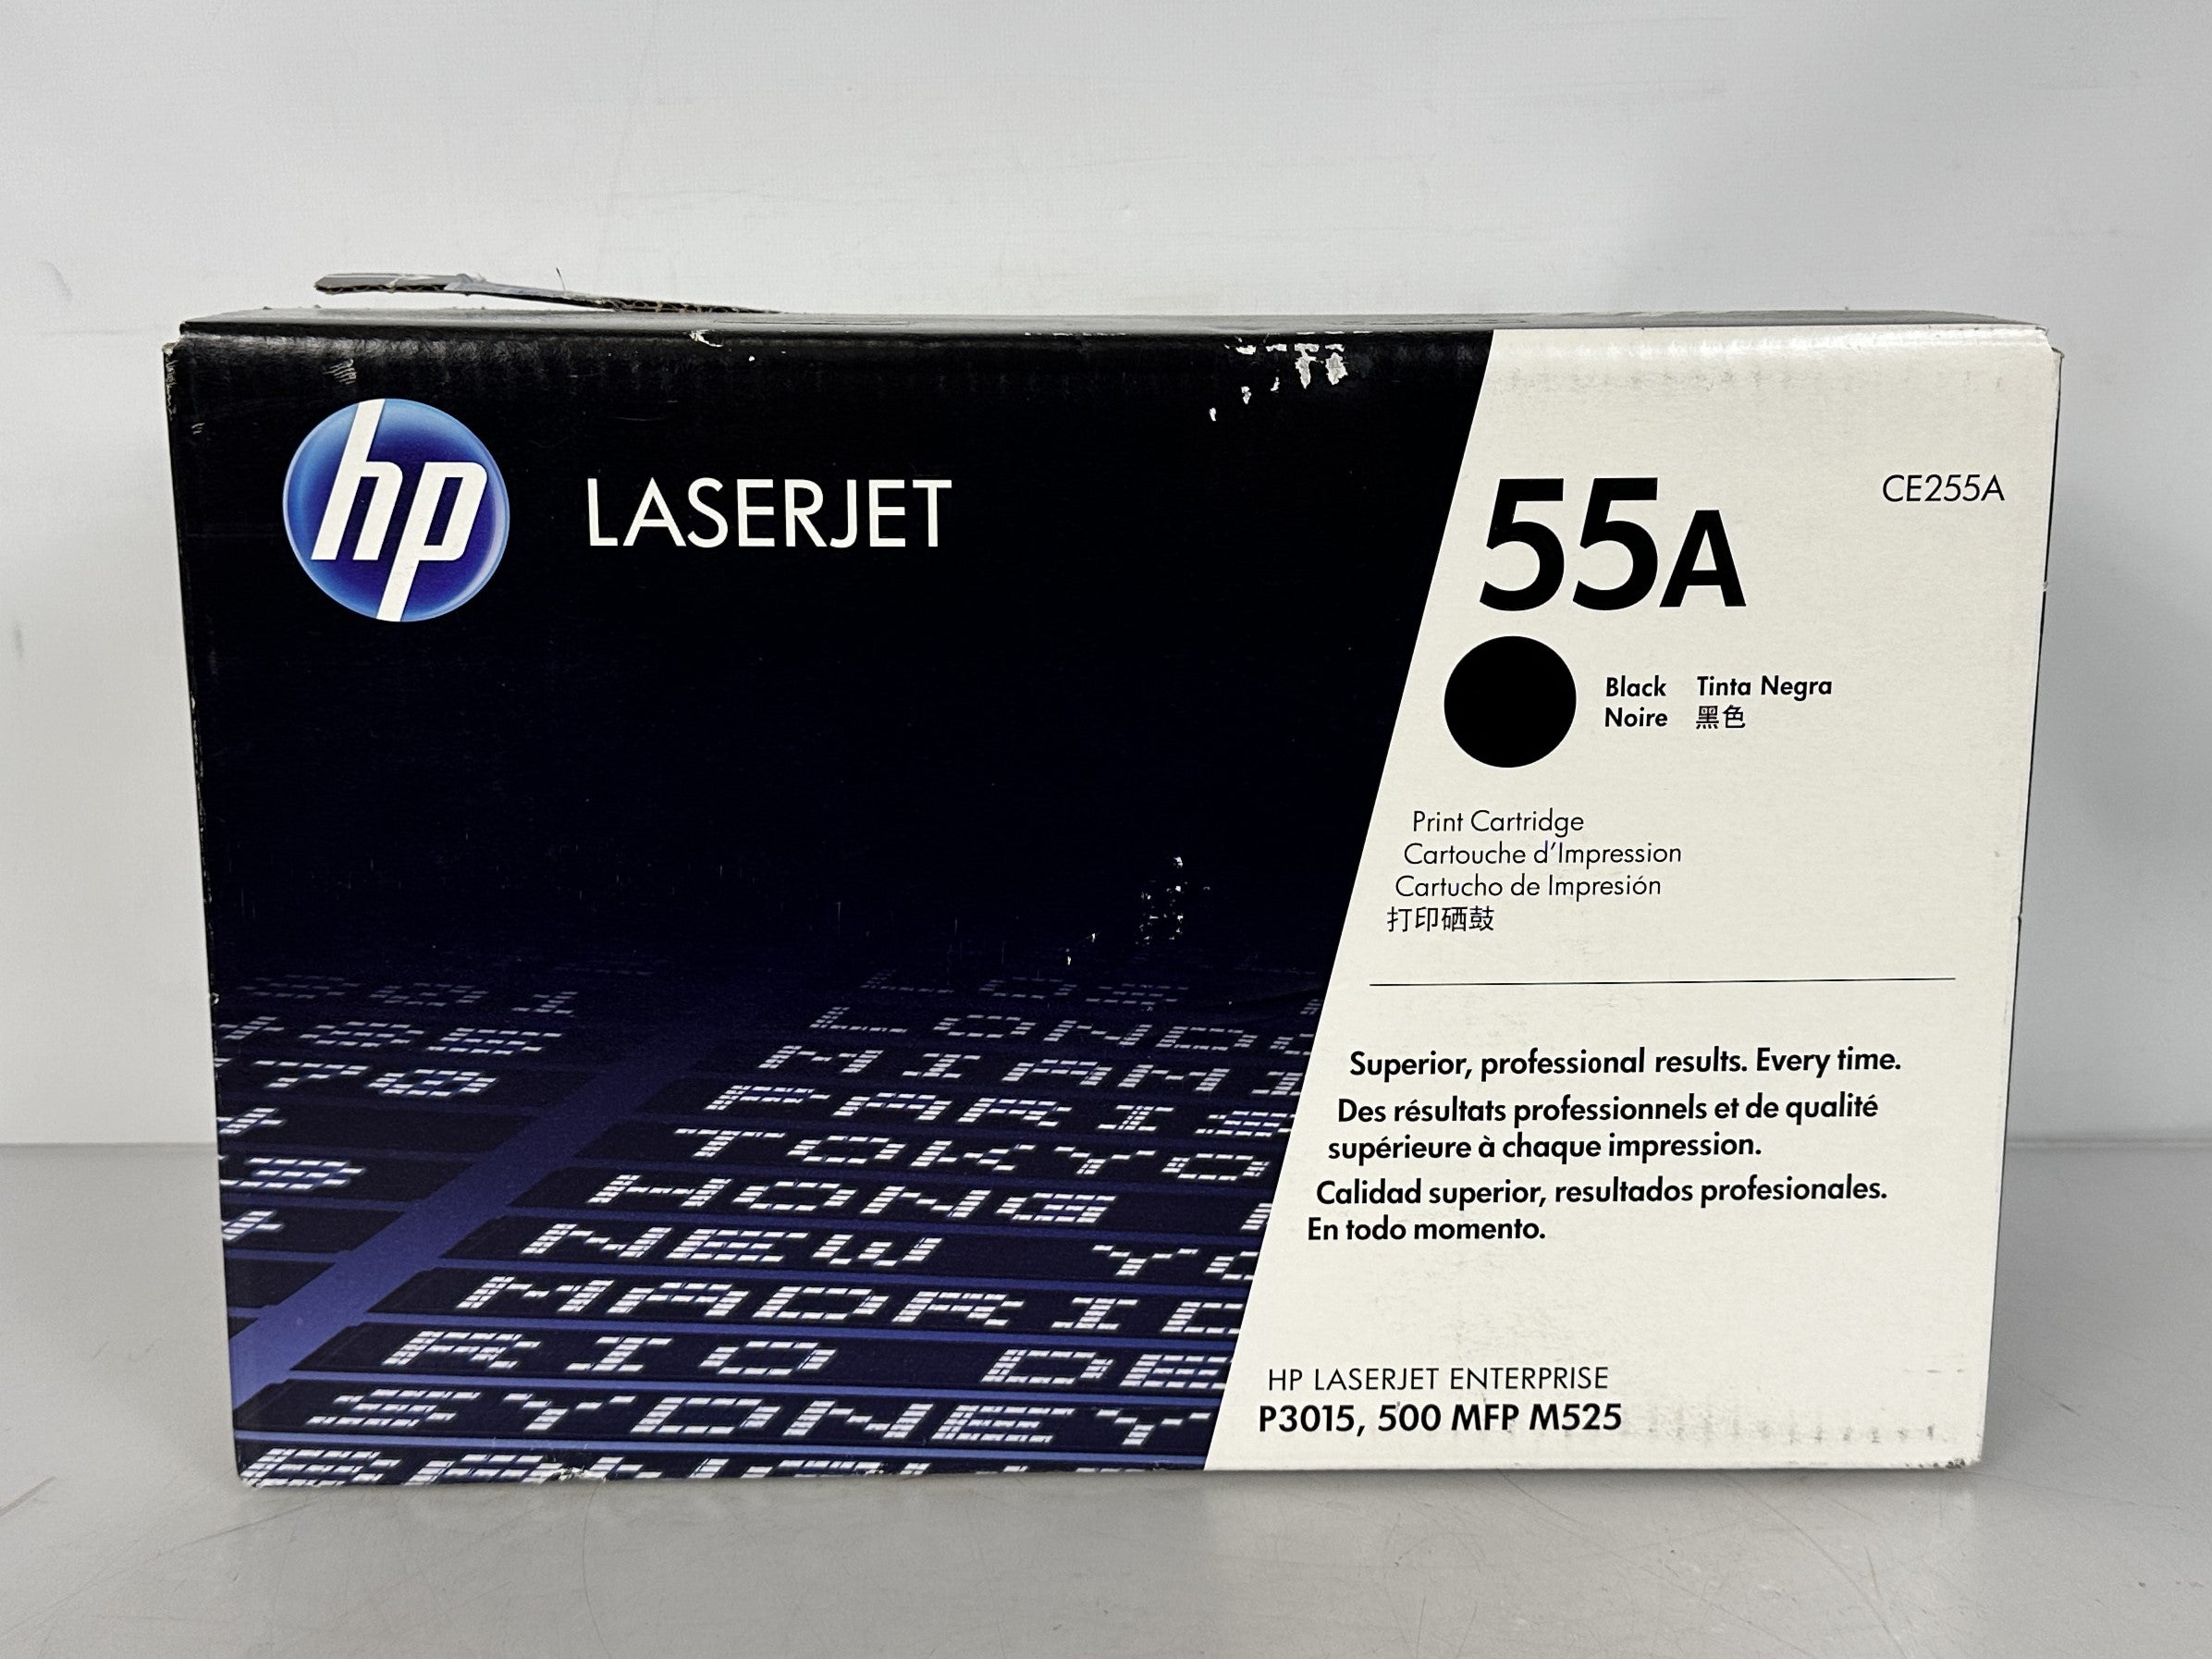 HP LaserJet 55A CE255A Black Toner Cartridge